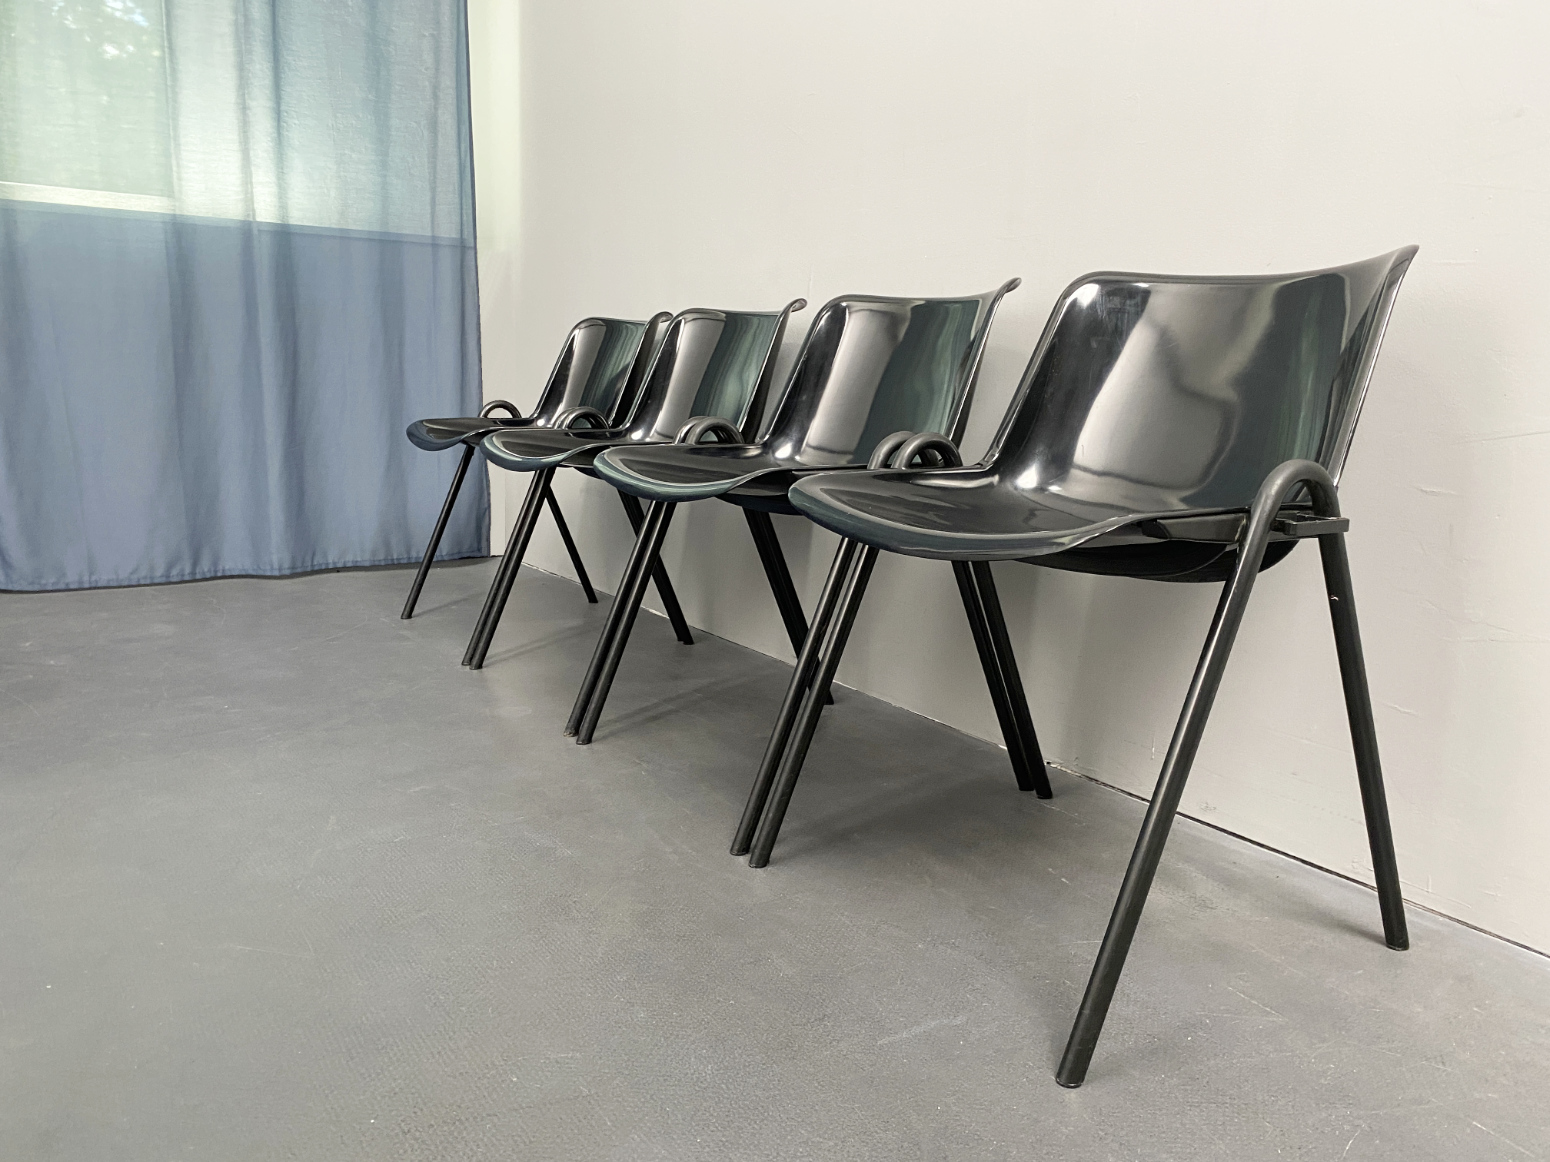 Stühle von Osvaldo Borsani stapelbar, Tecno